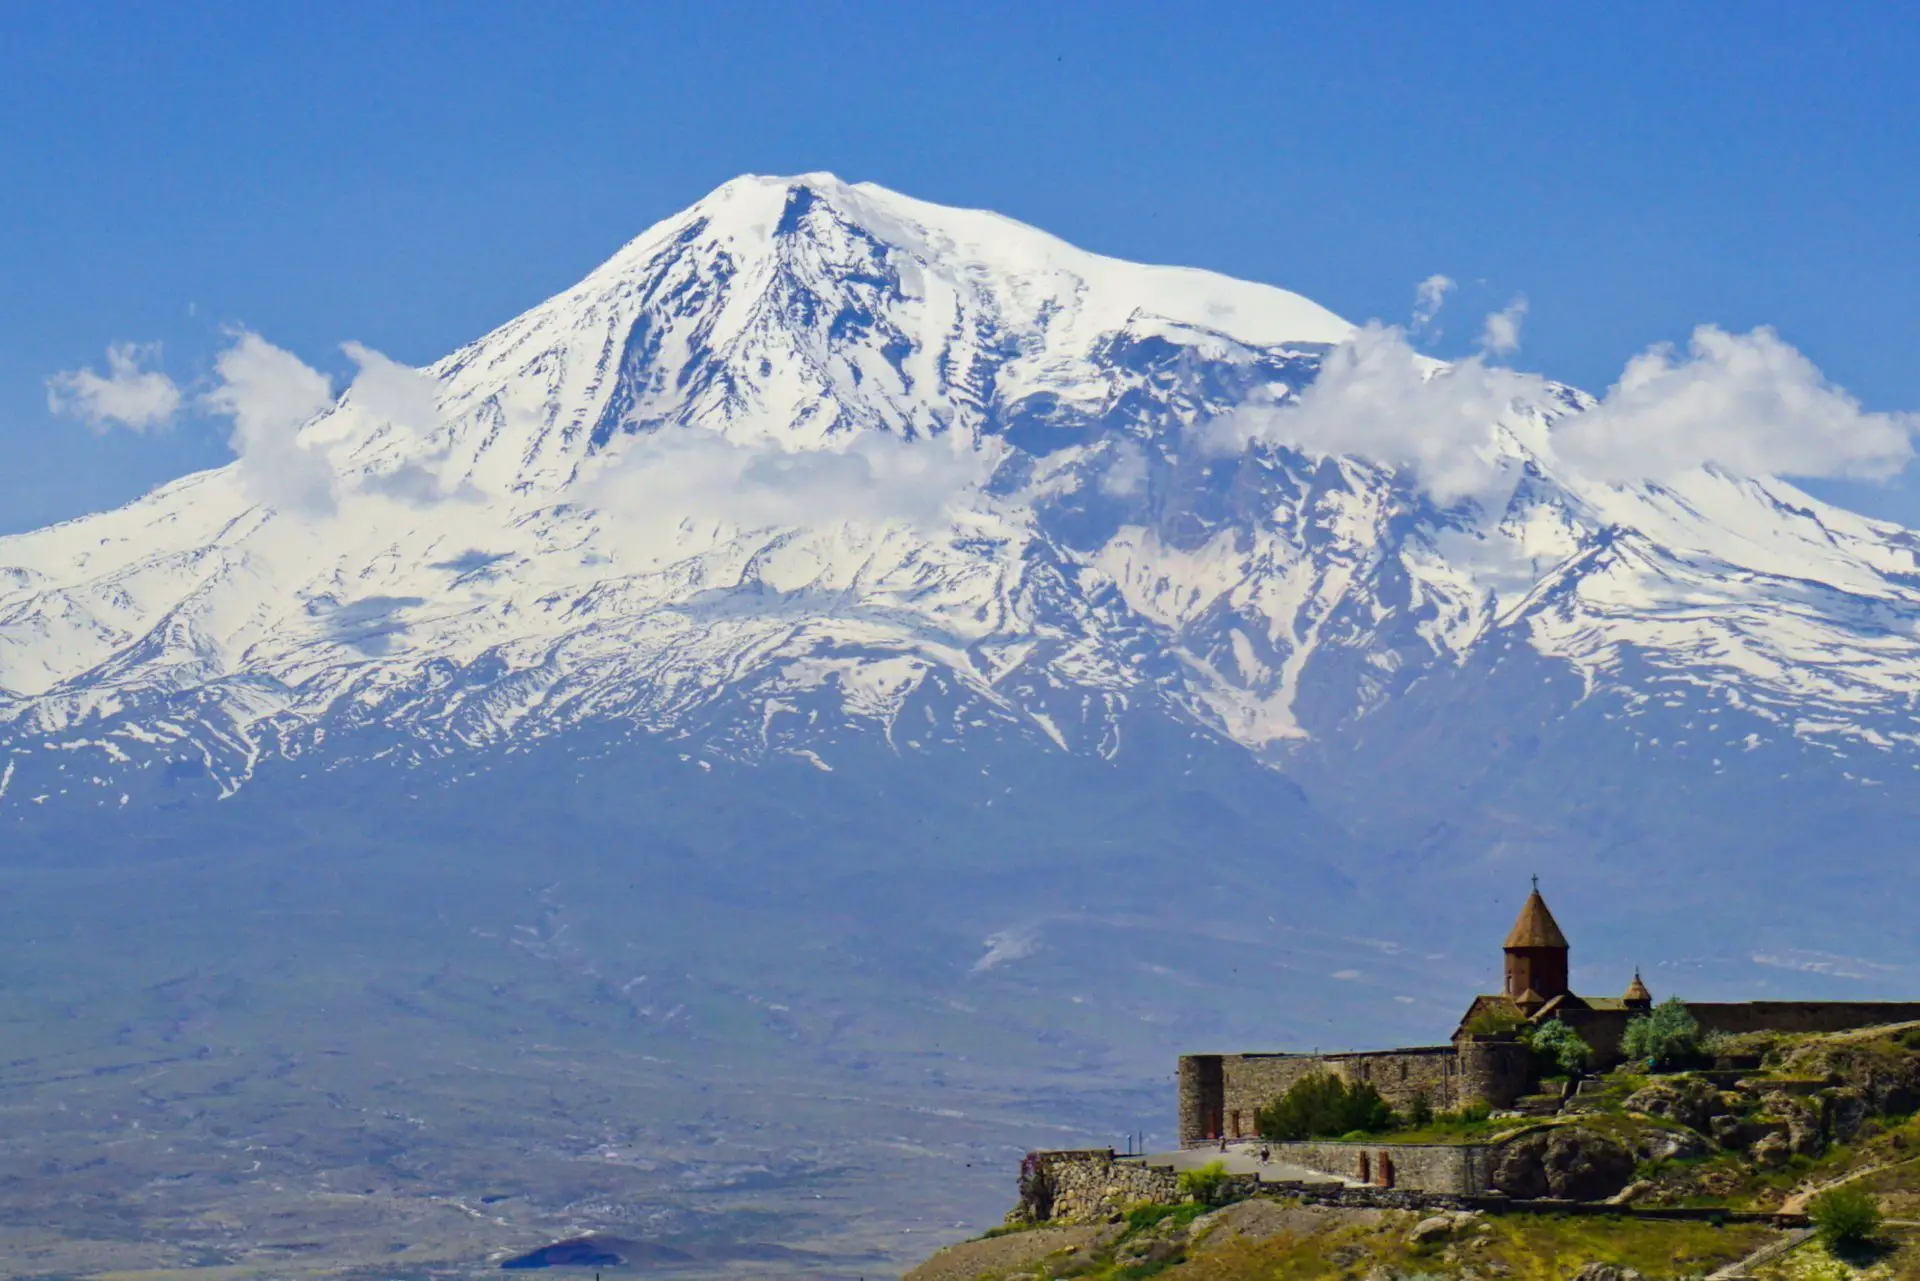 Khor Virap monastery, Armenia – Experiencing the Globe